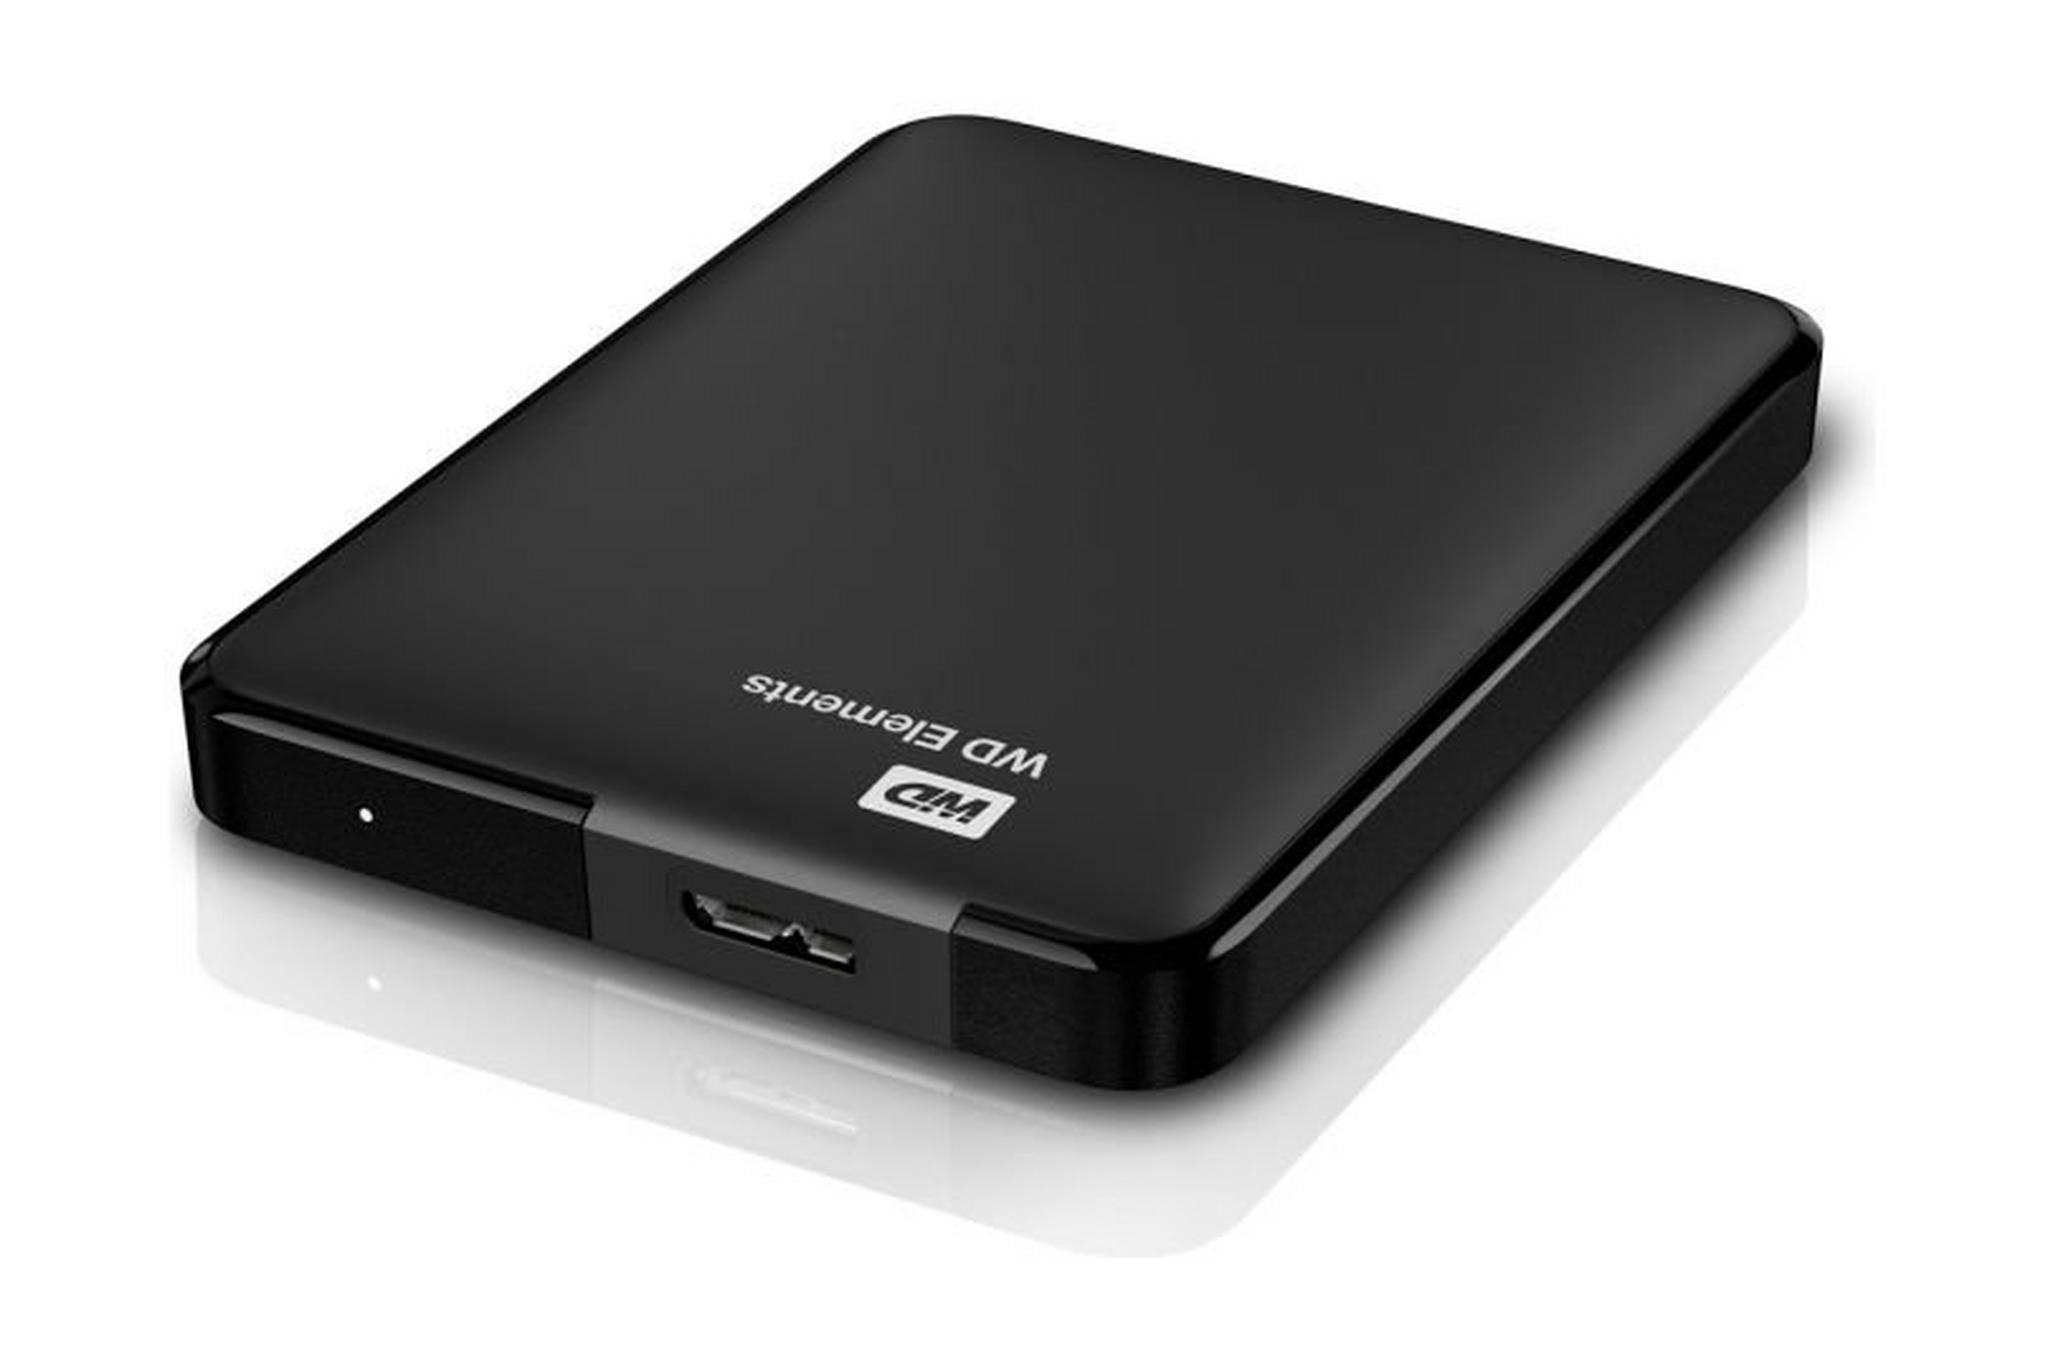 WD Elements 1TB USB 3.0 2.5-inch Portable Hard Drive, WDBUZG0010BBK - Black